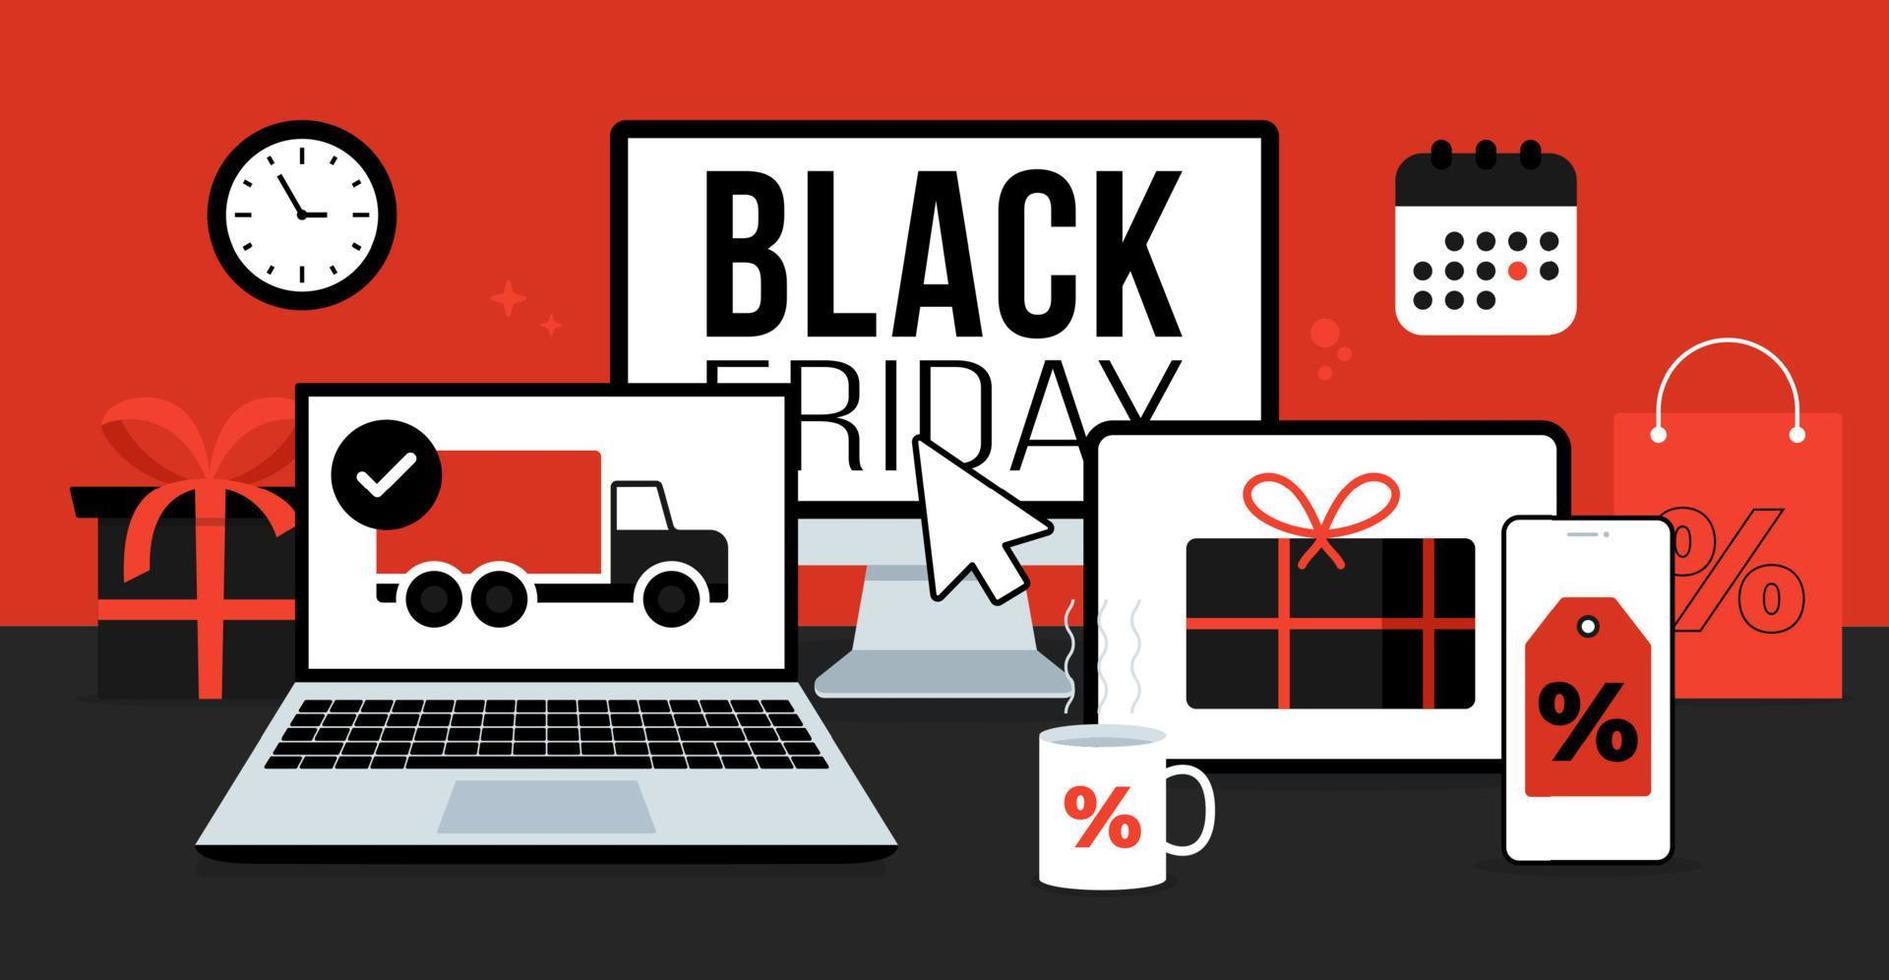 Black friday online sale vector illustration. Modern flat design concept with desktop computer, phone, laptop and tablet and flat elements. Online shopping